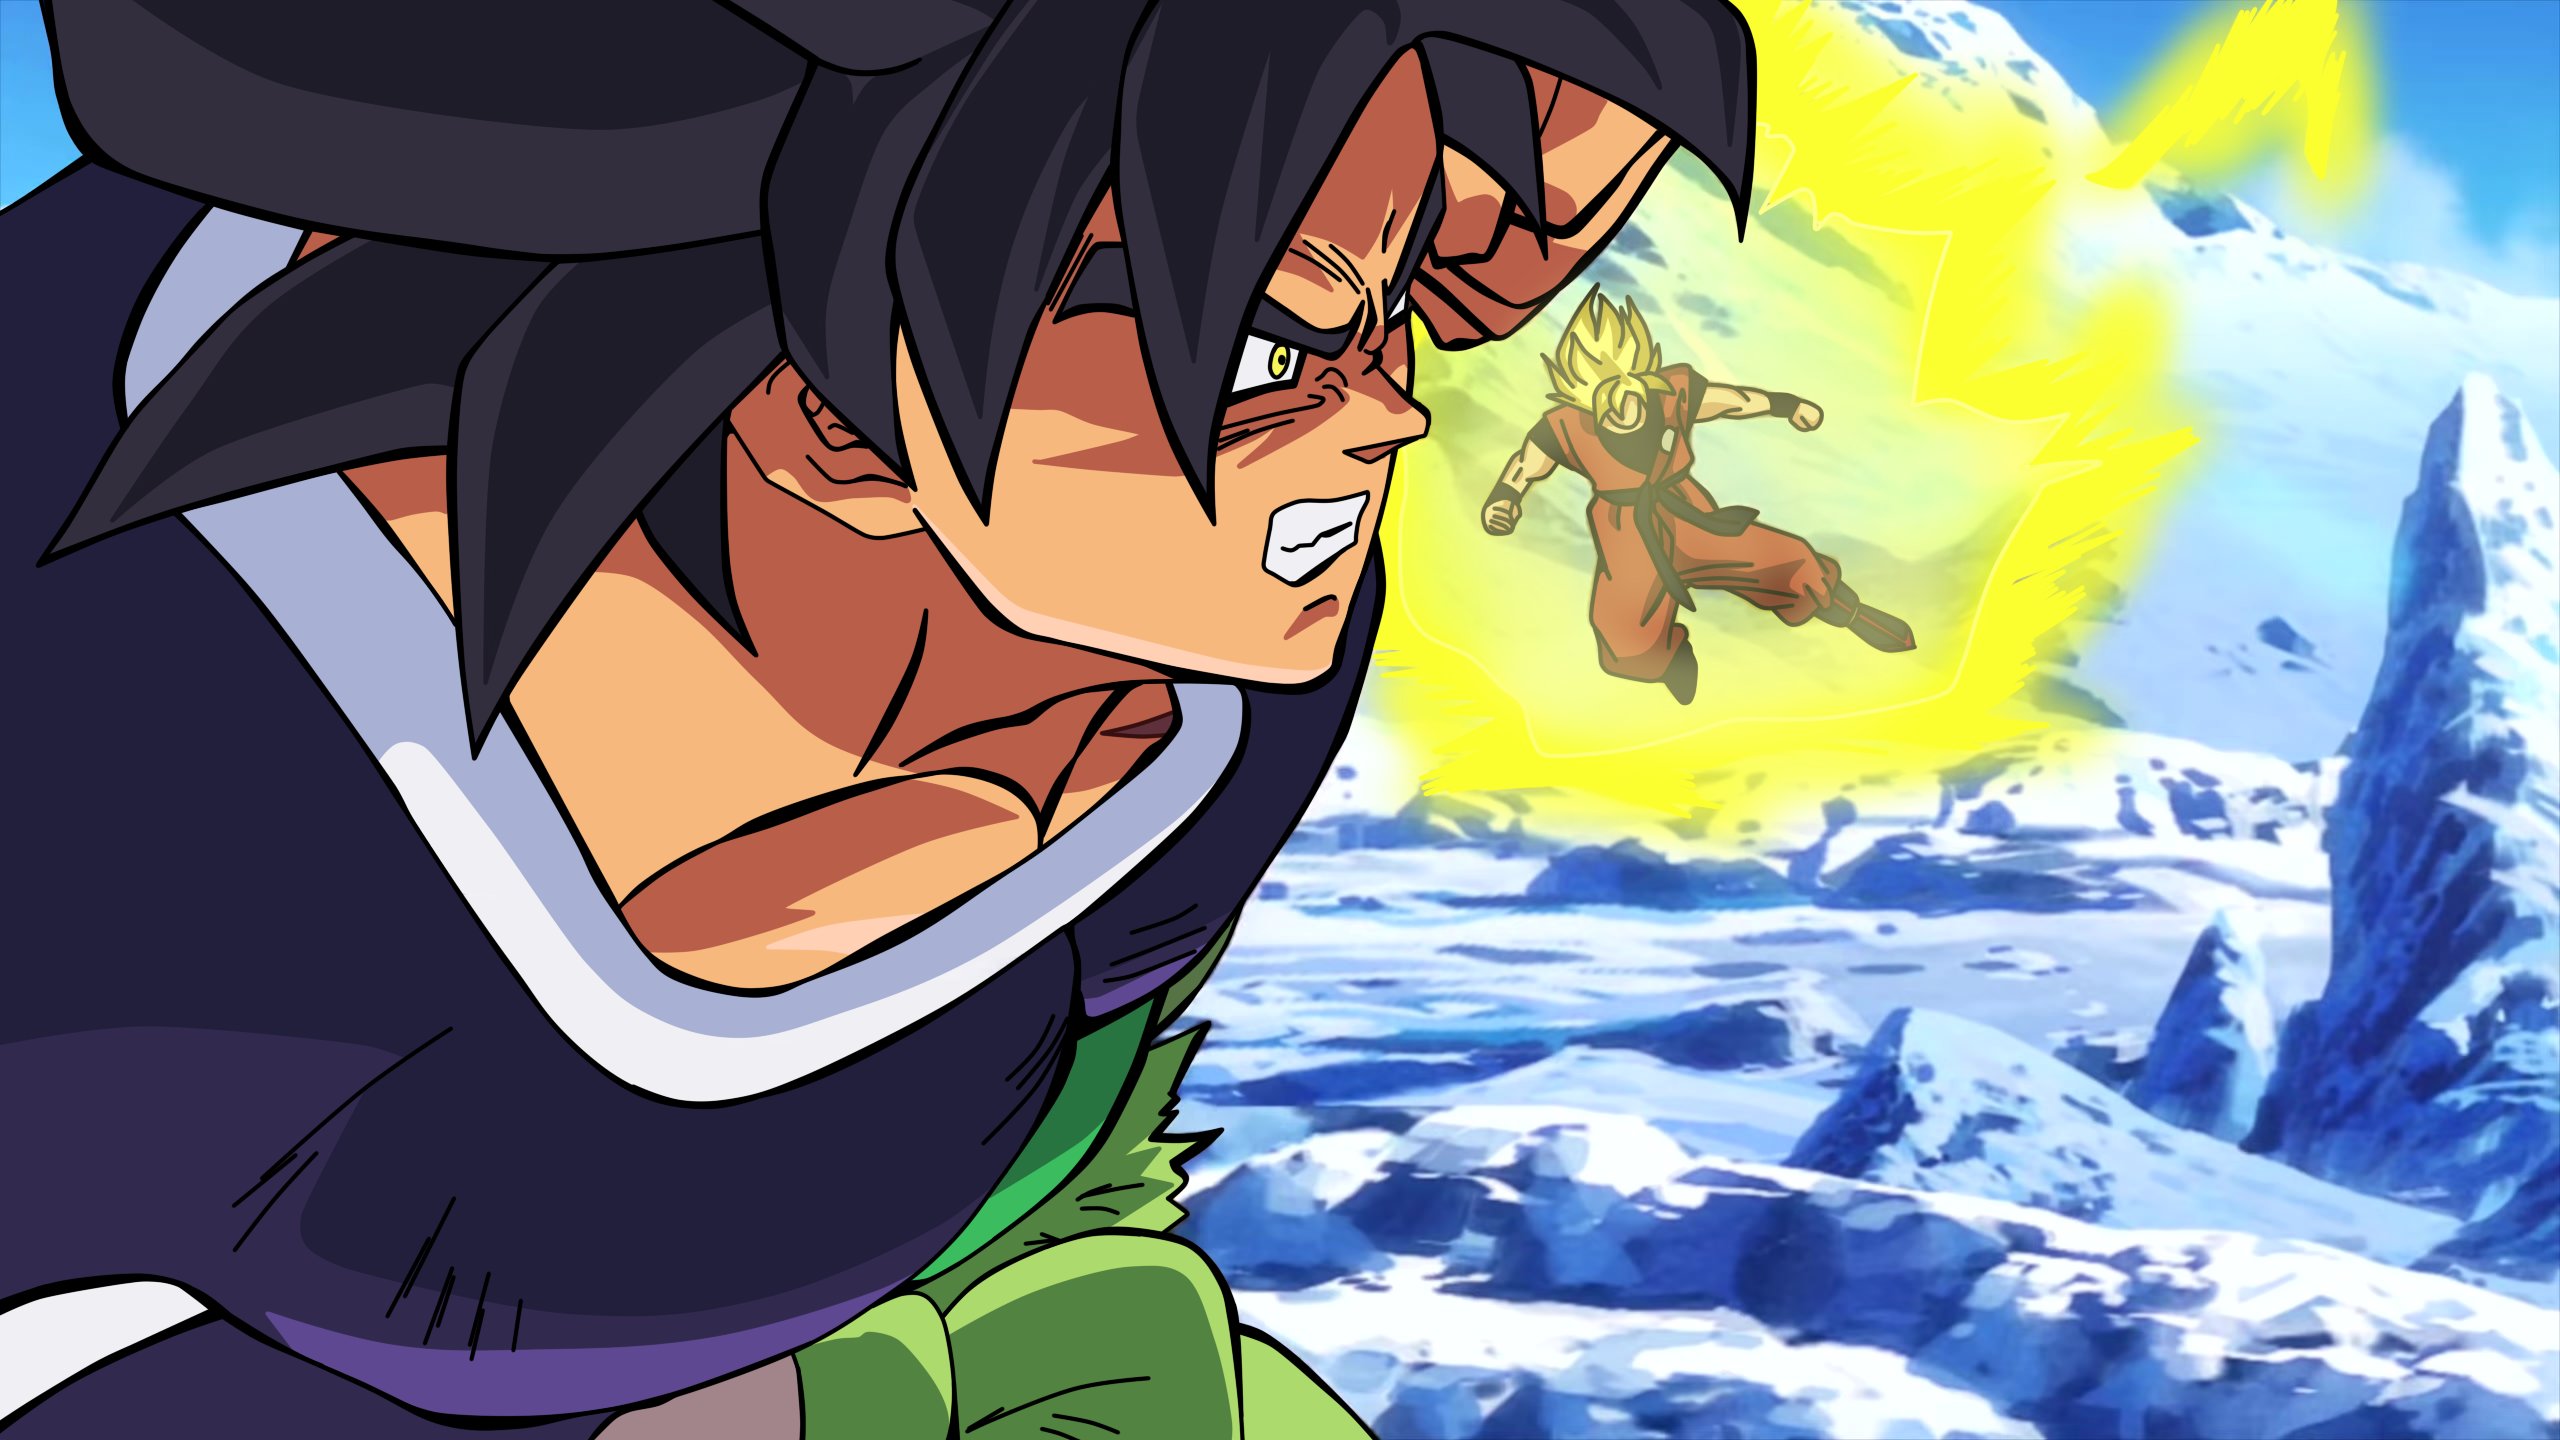 Goku Vs. Broly: SSJ by CELL-MAN on DeviantArt